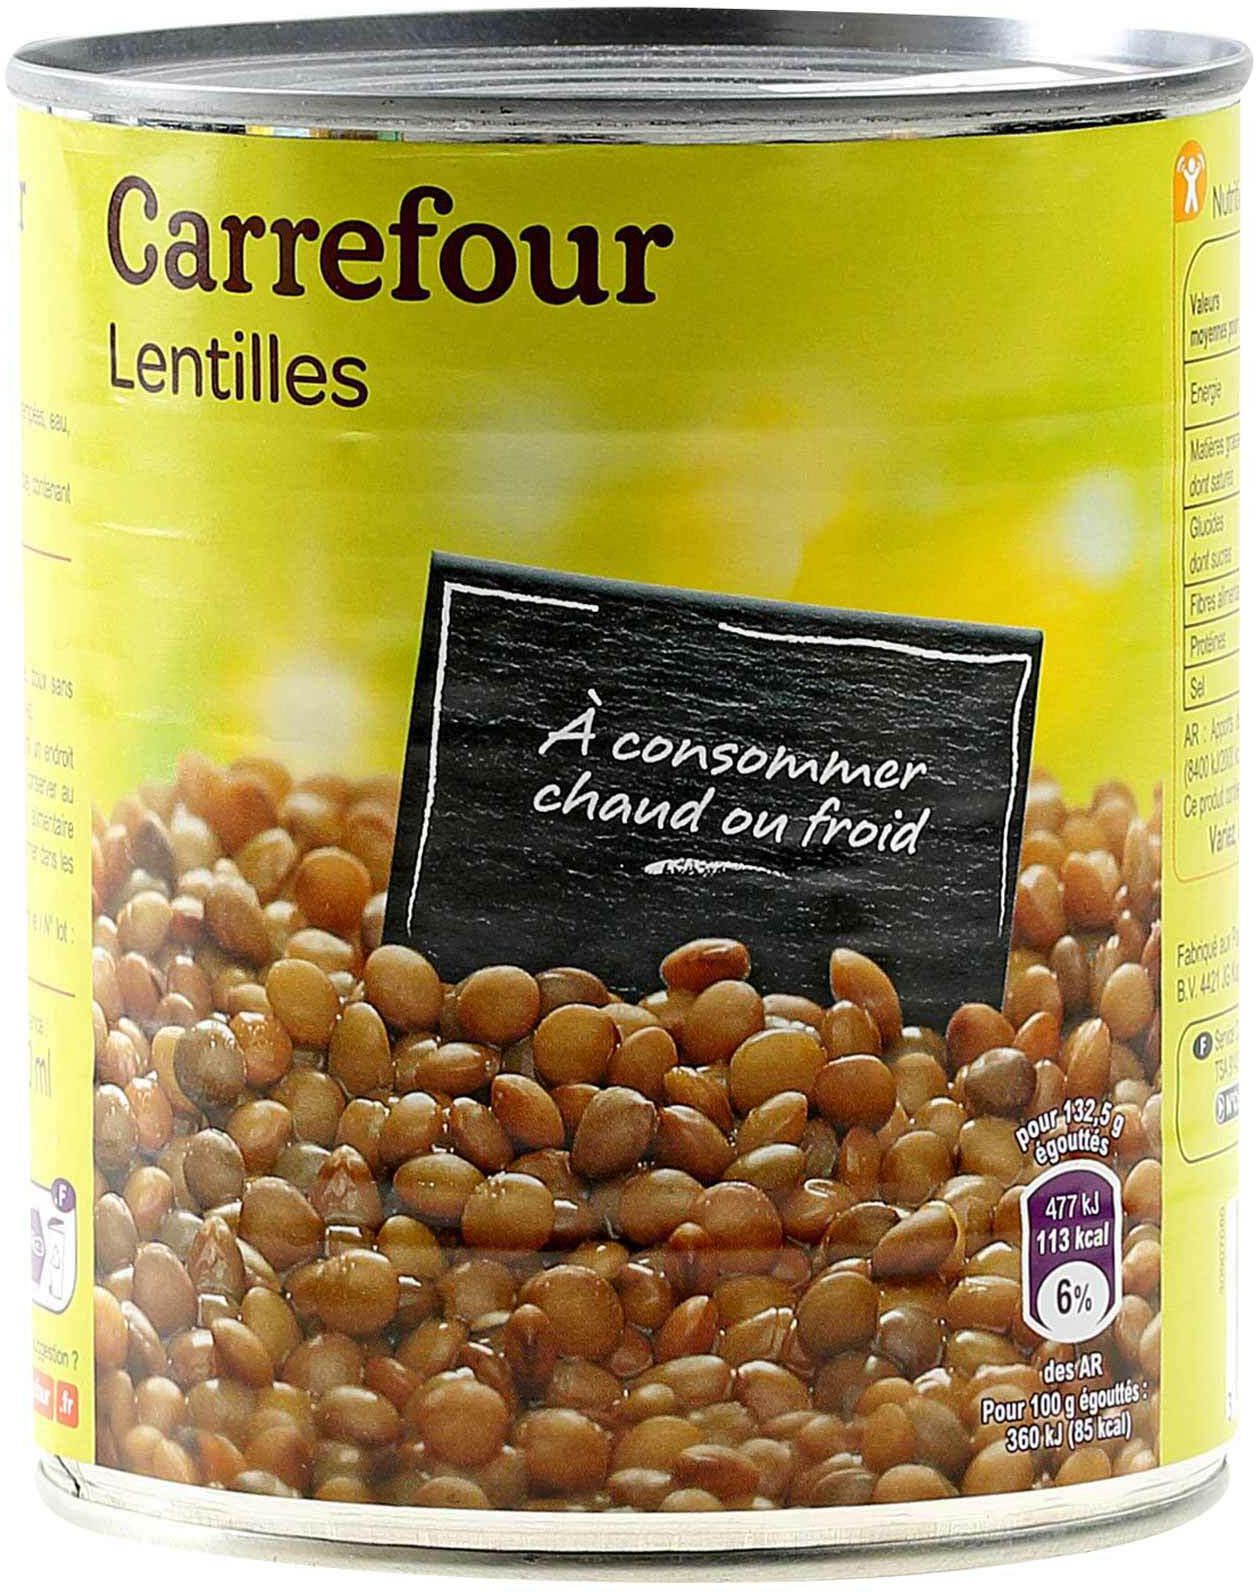 Carrefour lentils 800g price from carrefouruae in UAE